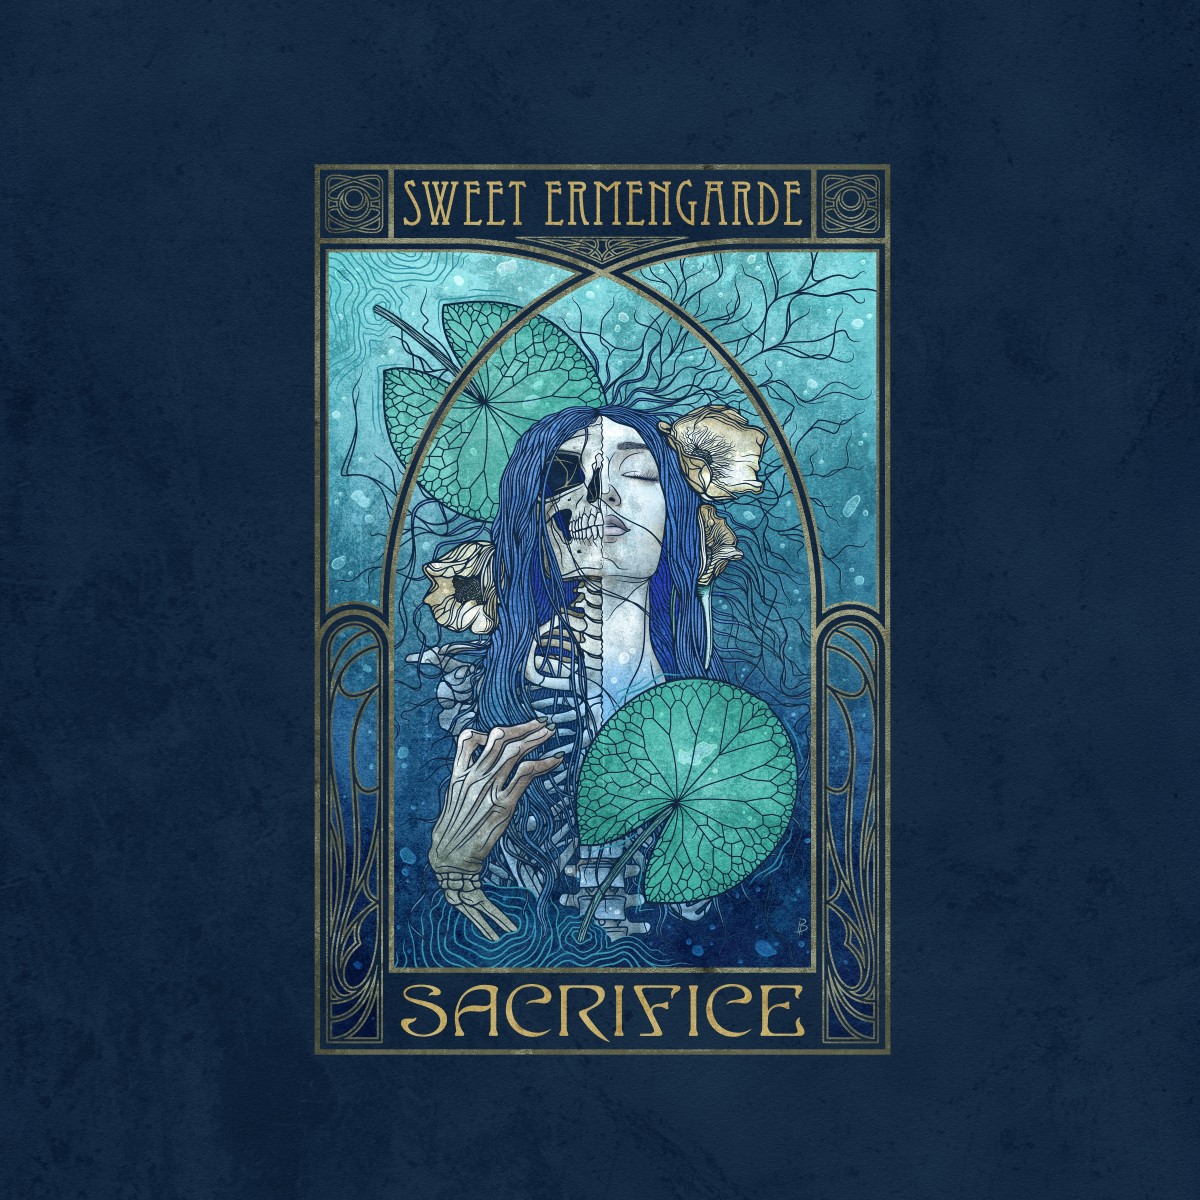 Sweet Ermengarde - Sacrifice